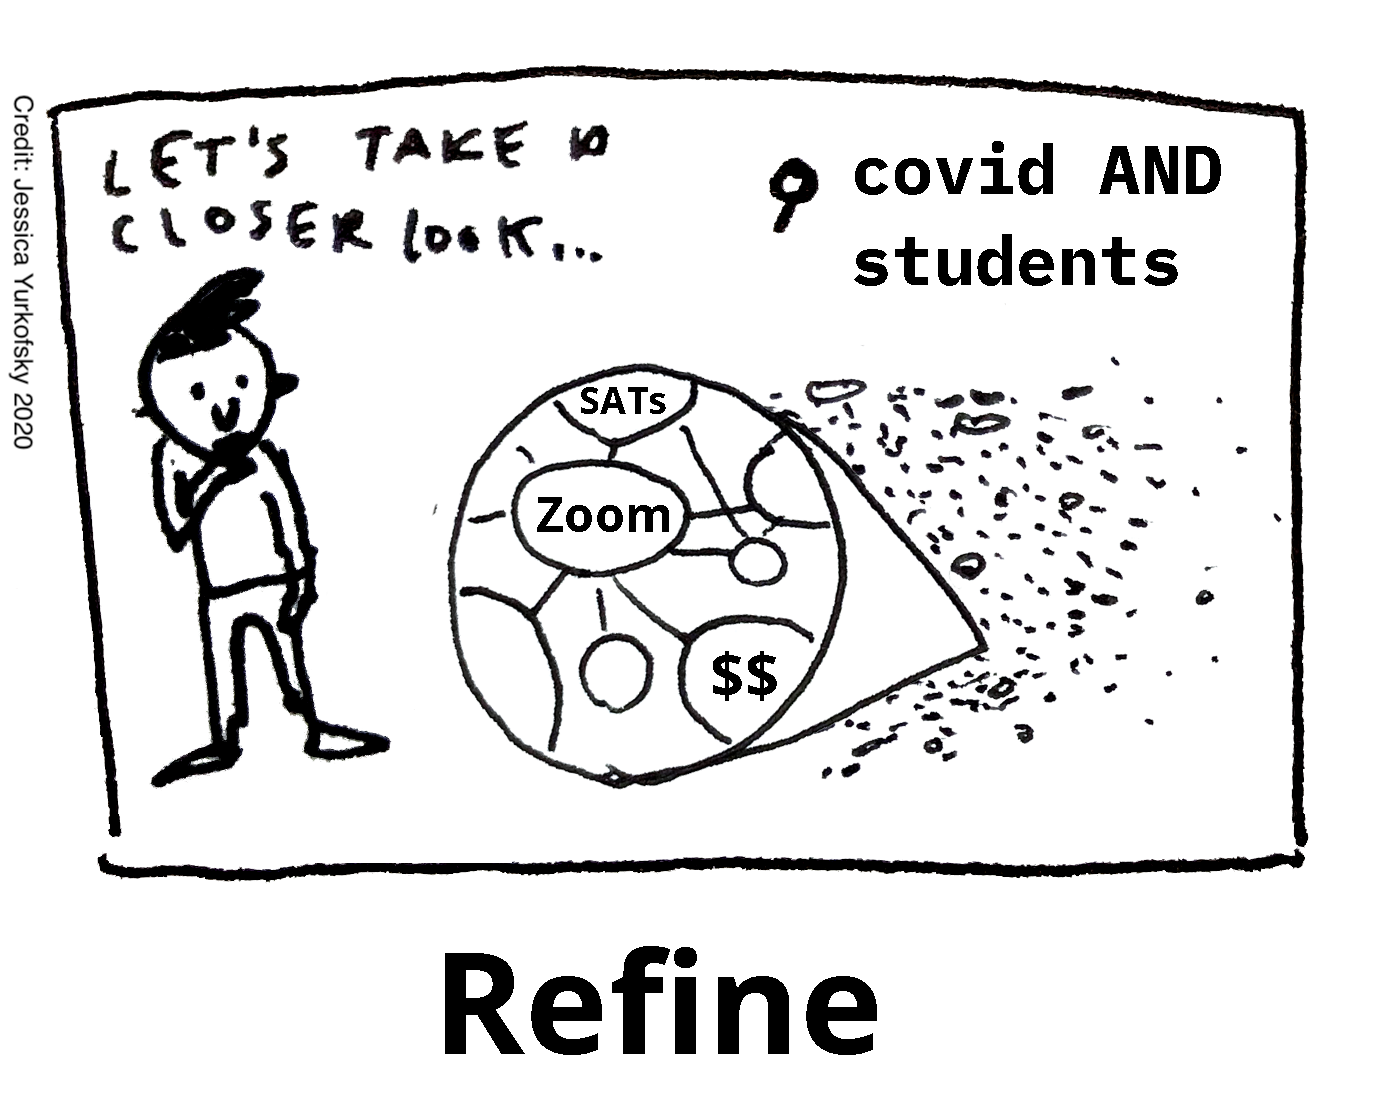 Refine: Using Figure 2